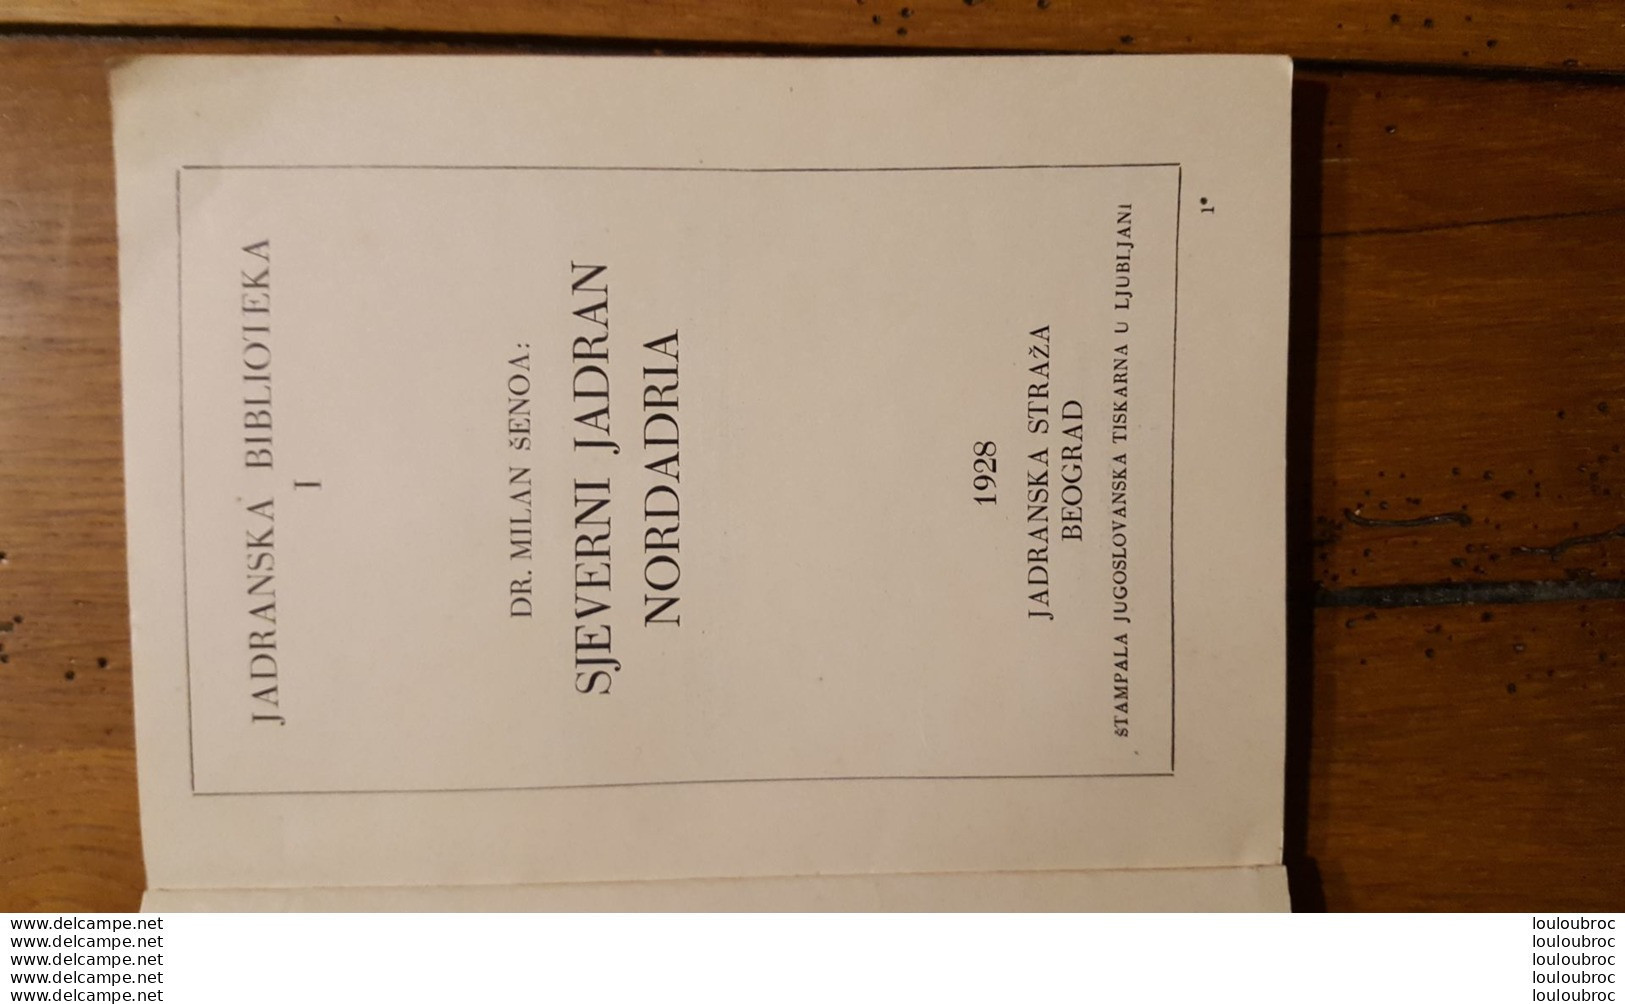 RARE 1928 CROATIE SJEVERNI JADRAN NORDADRIA N°1 JADRANSKA BIBILOTEKA 110 PAGES DONT 62 PHOTOGRAPHIES  15 X 11 CM - Documents Historiques